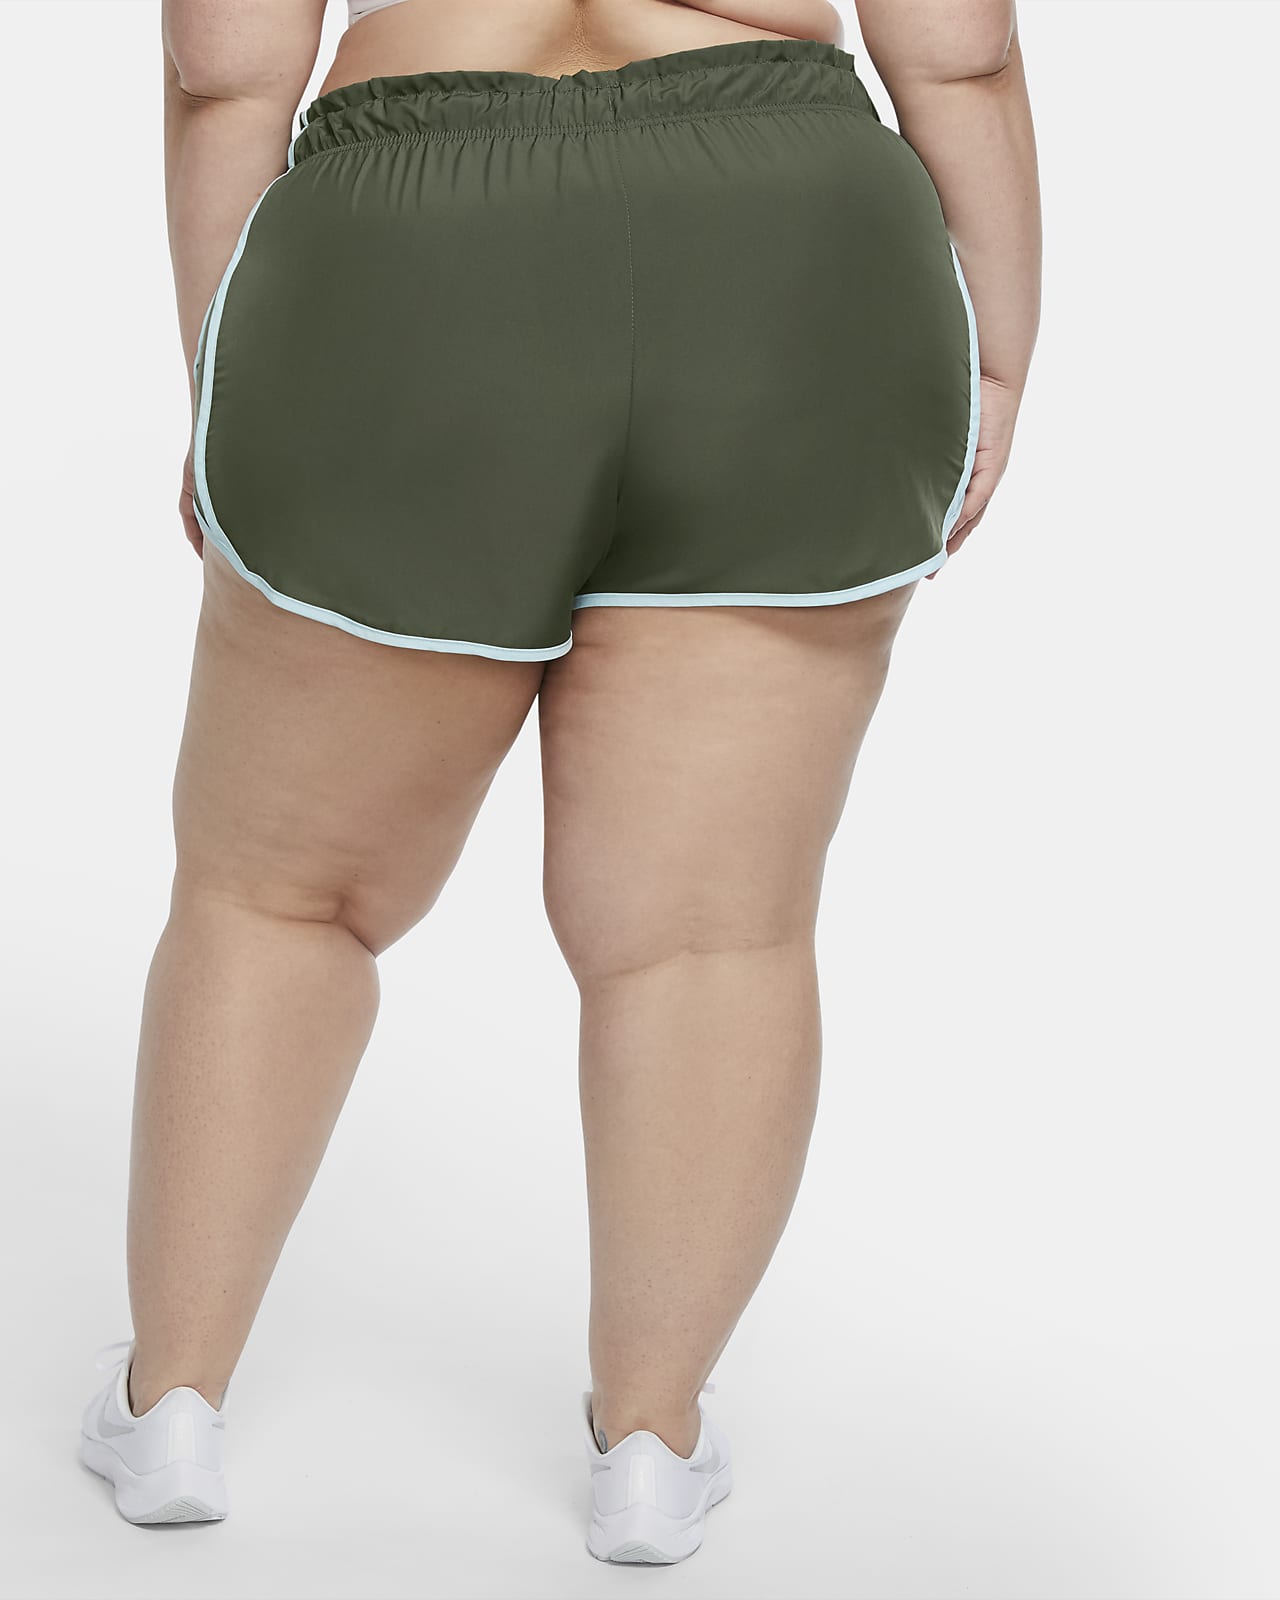 nike women's shorts plus size